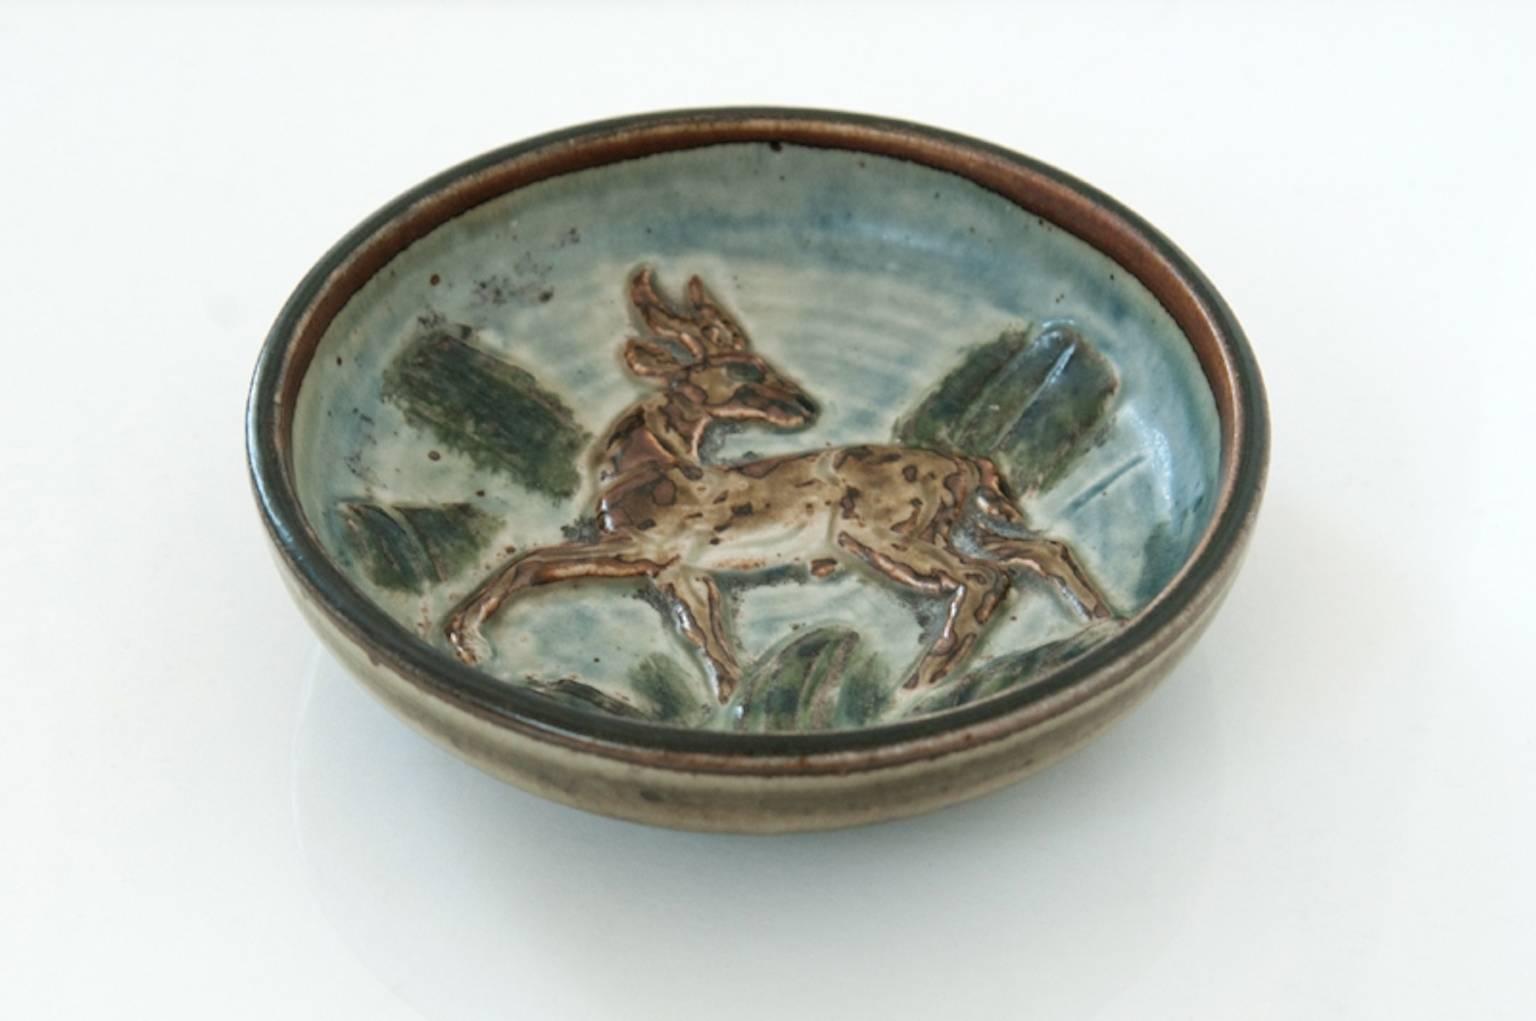 Vintage Danish Modern ceramic bowl with stag motif.

